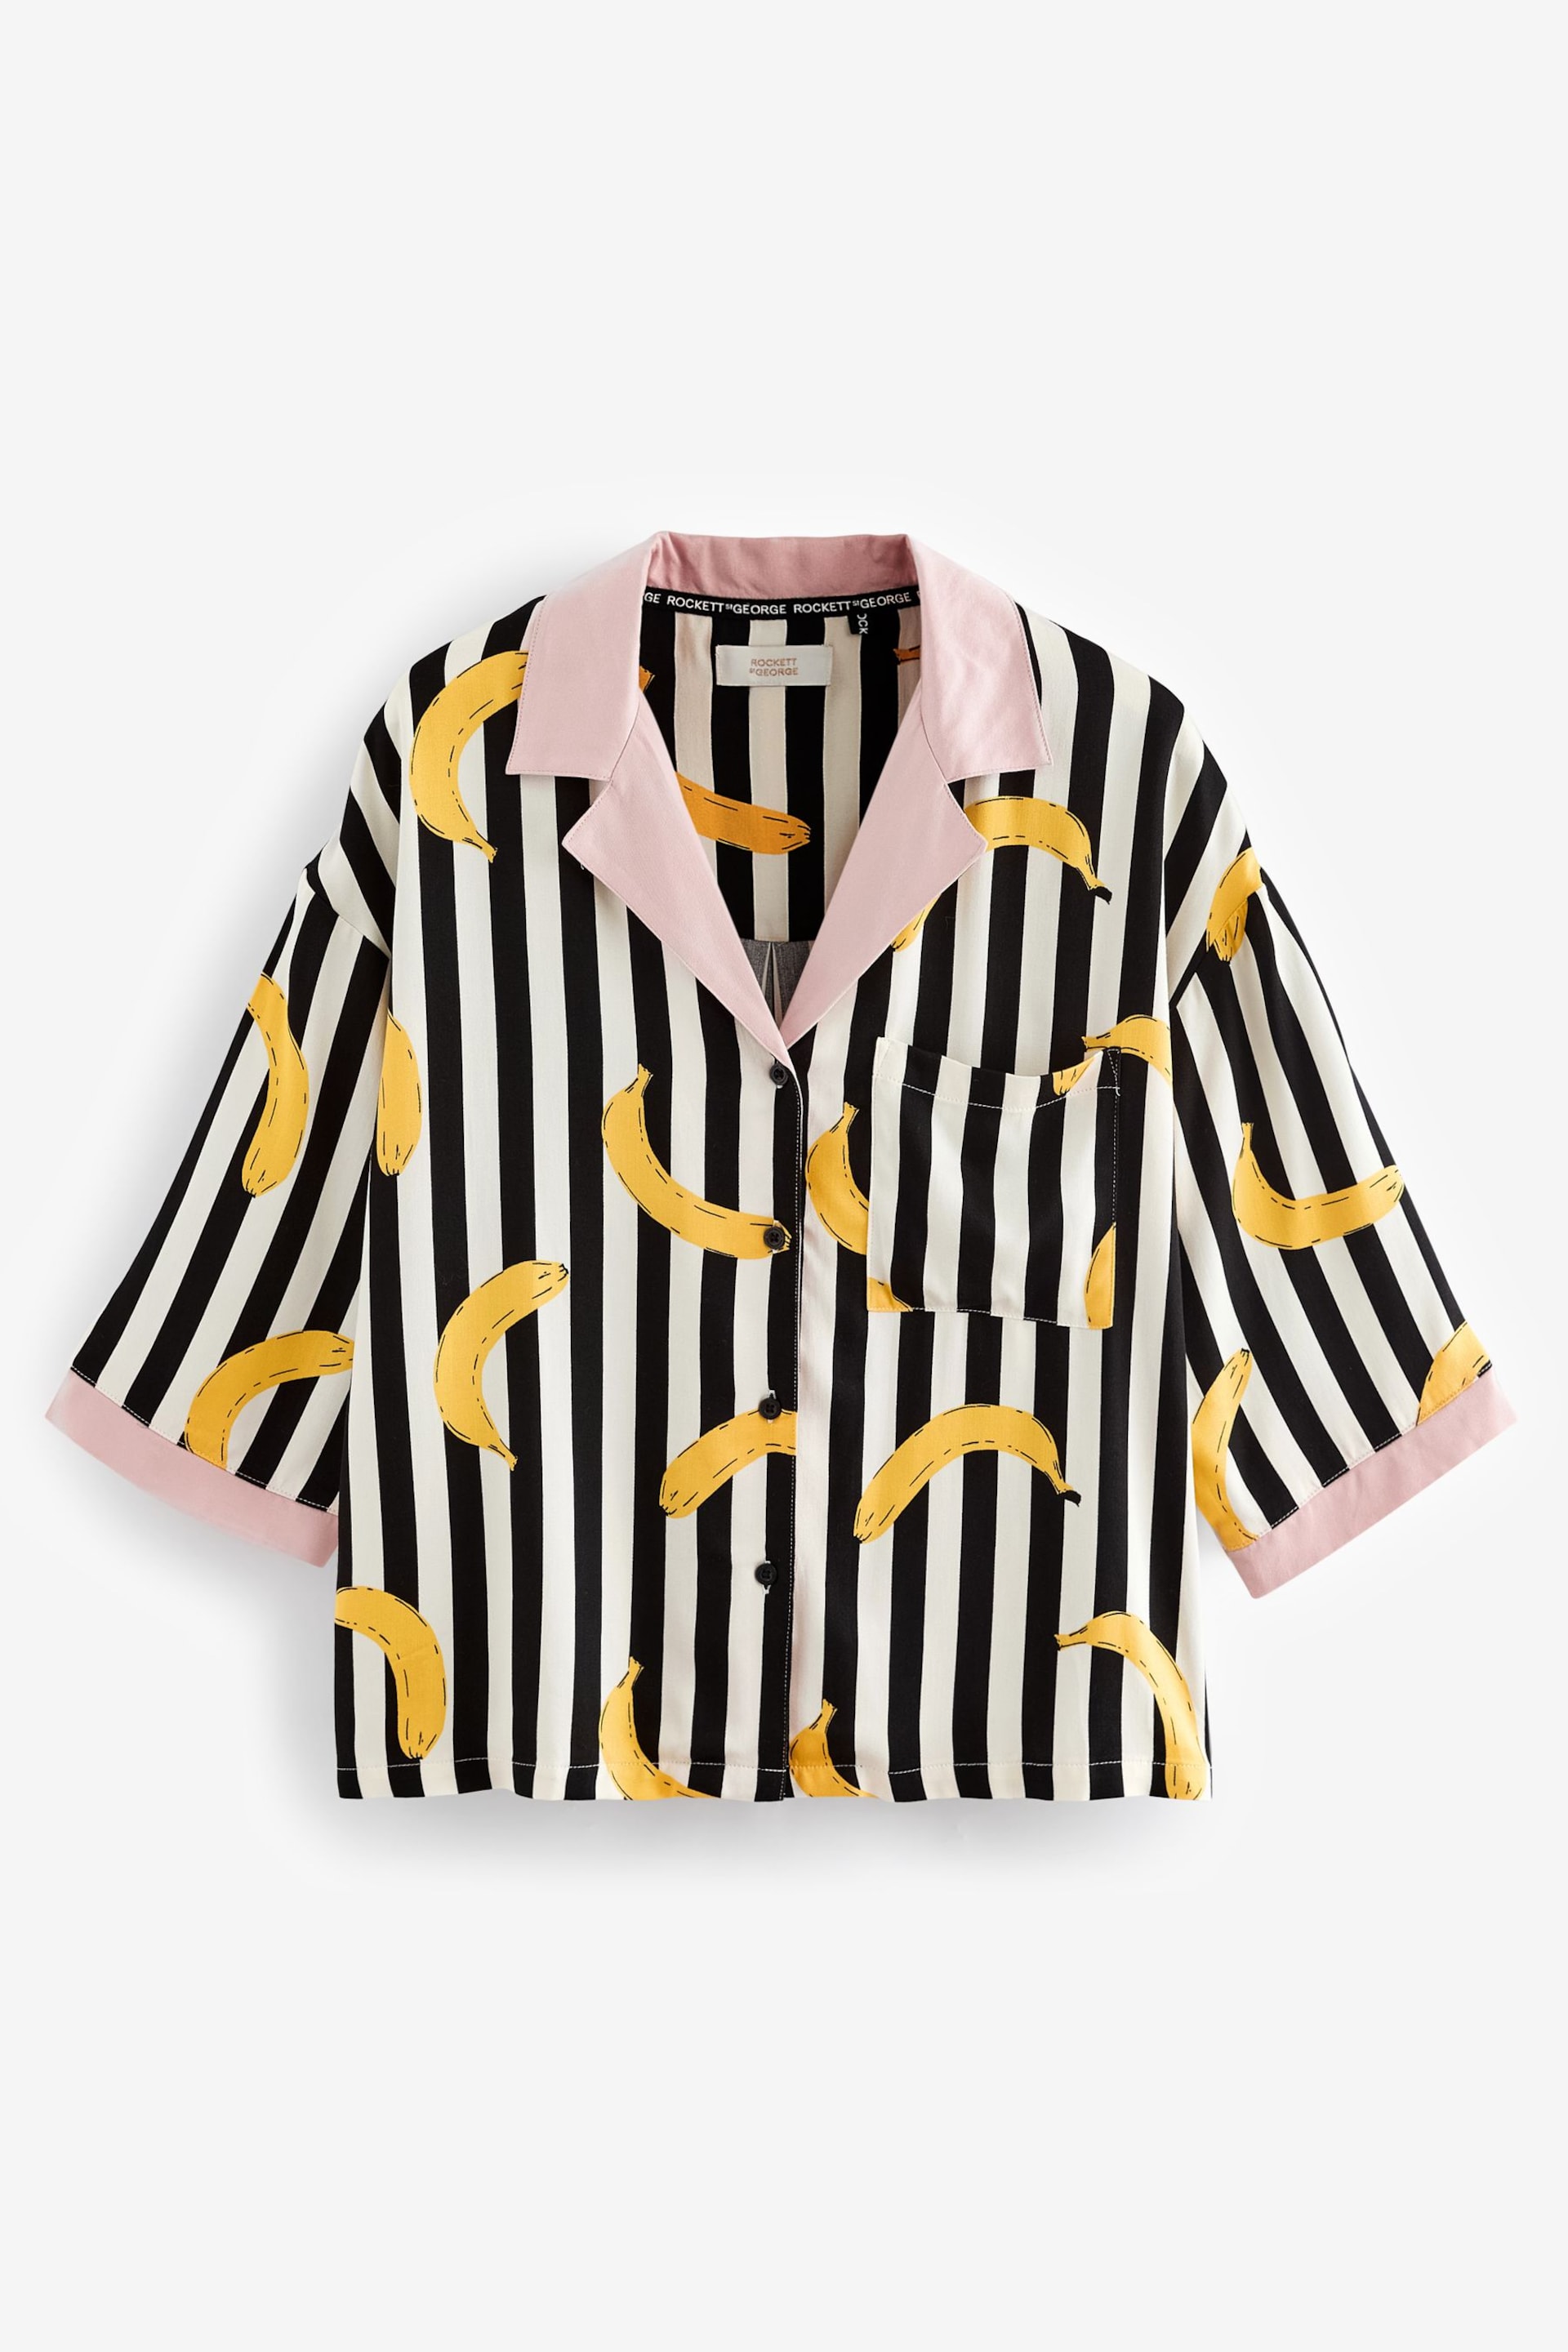 Rockett St George Monochrome Stripe Banana Print Woven Viscose Button Through Pyjamas - Image 9 of 10